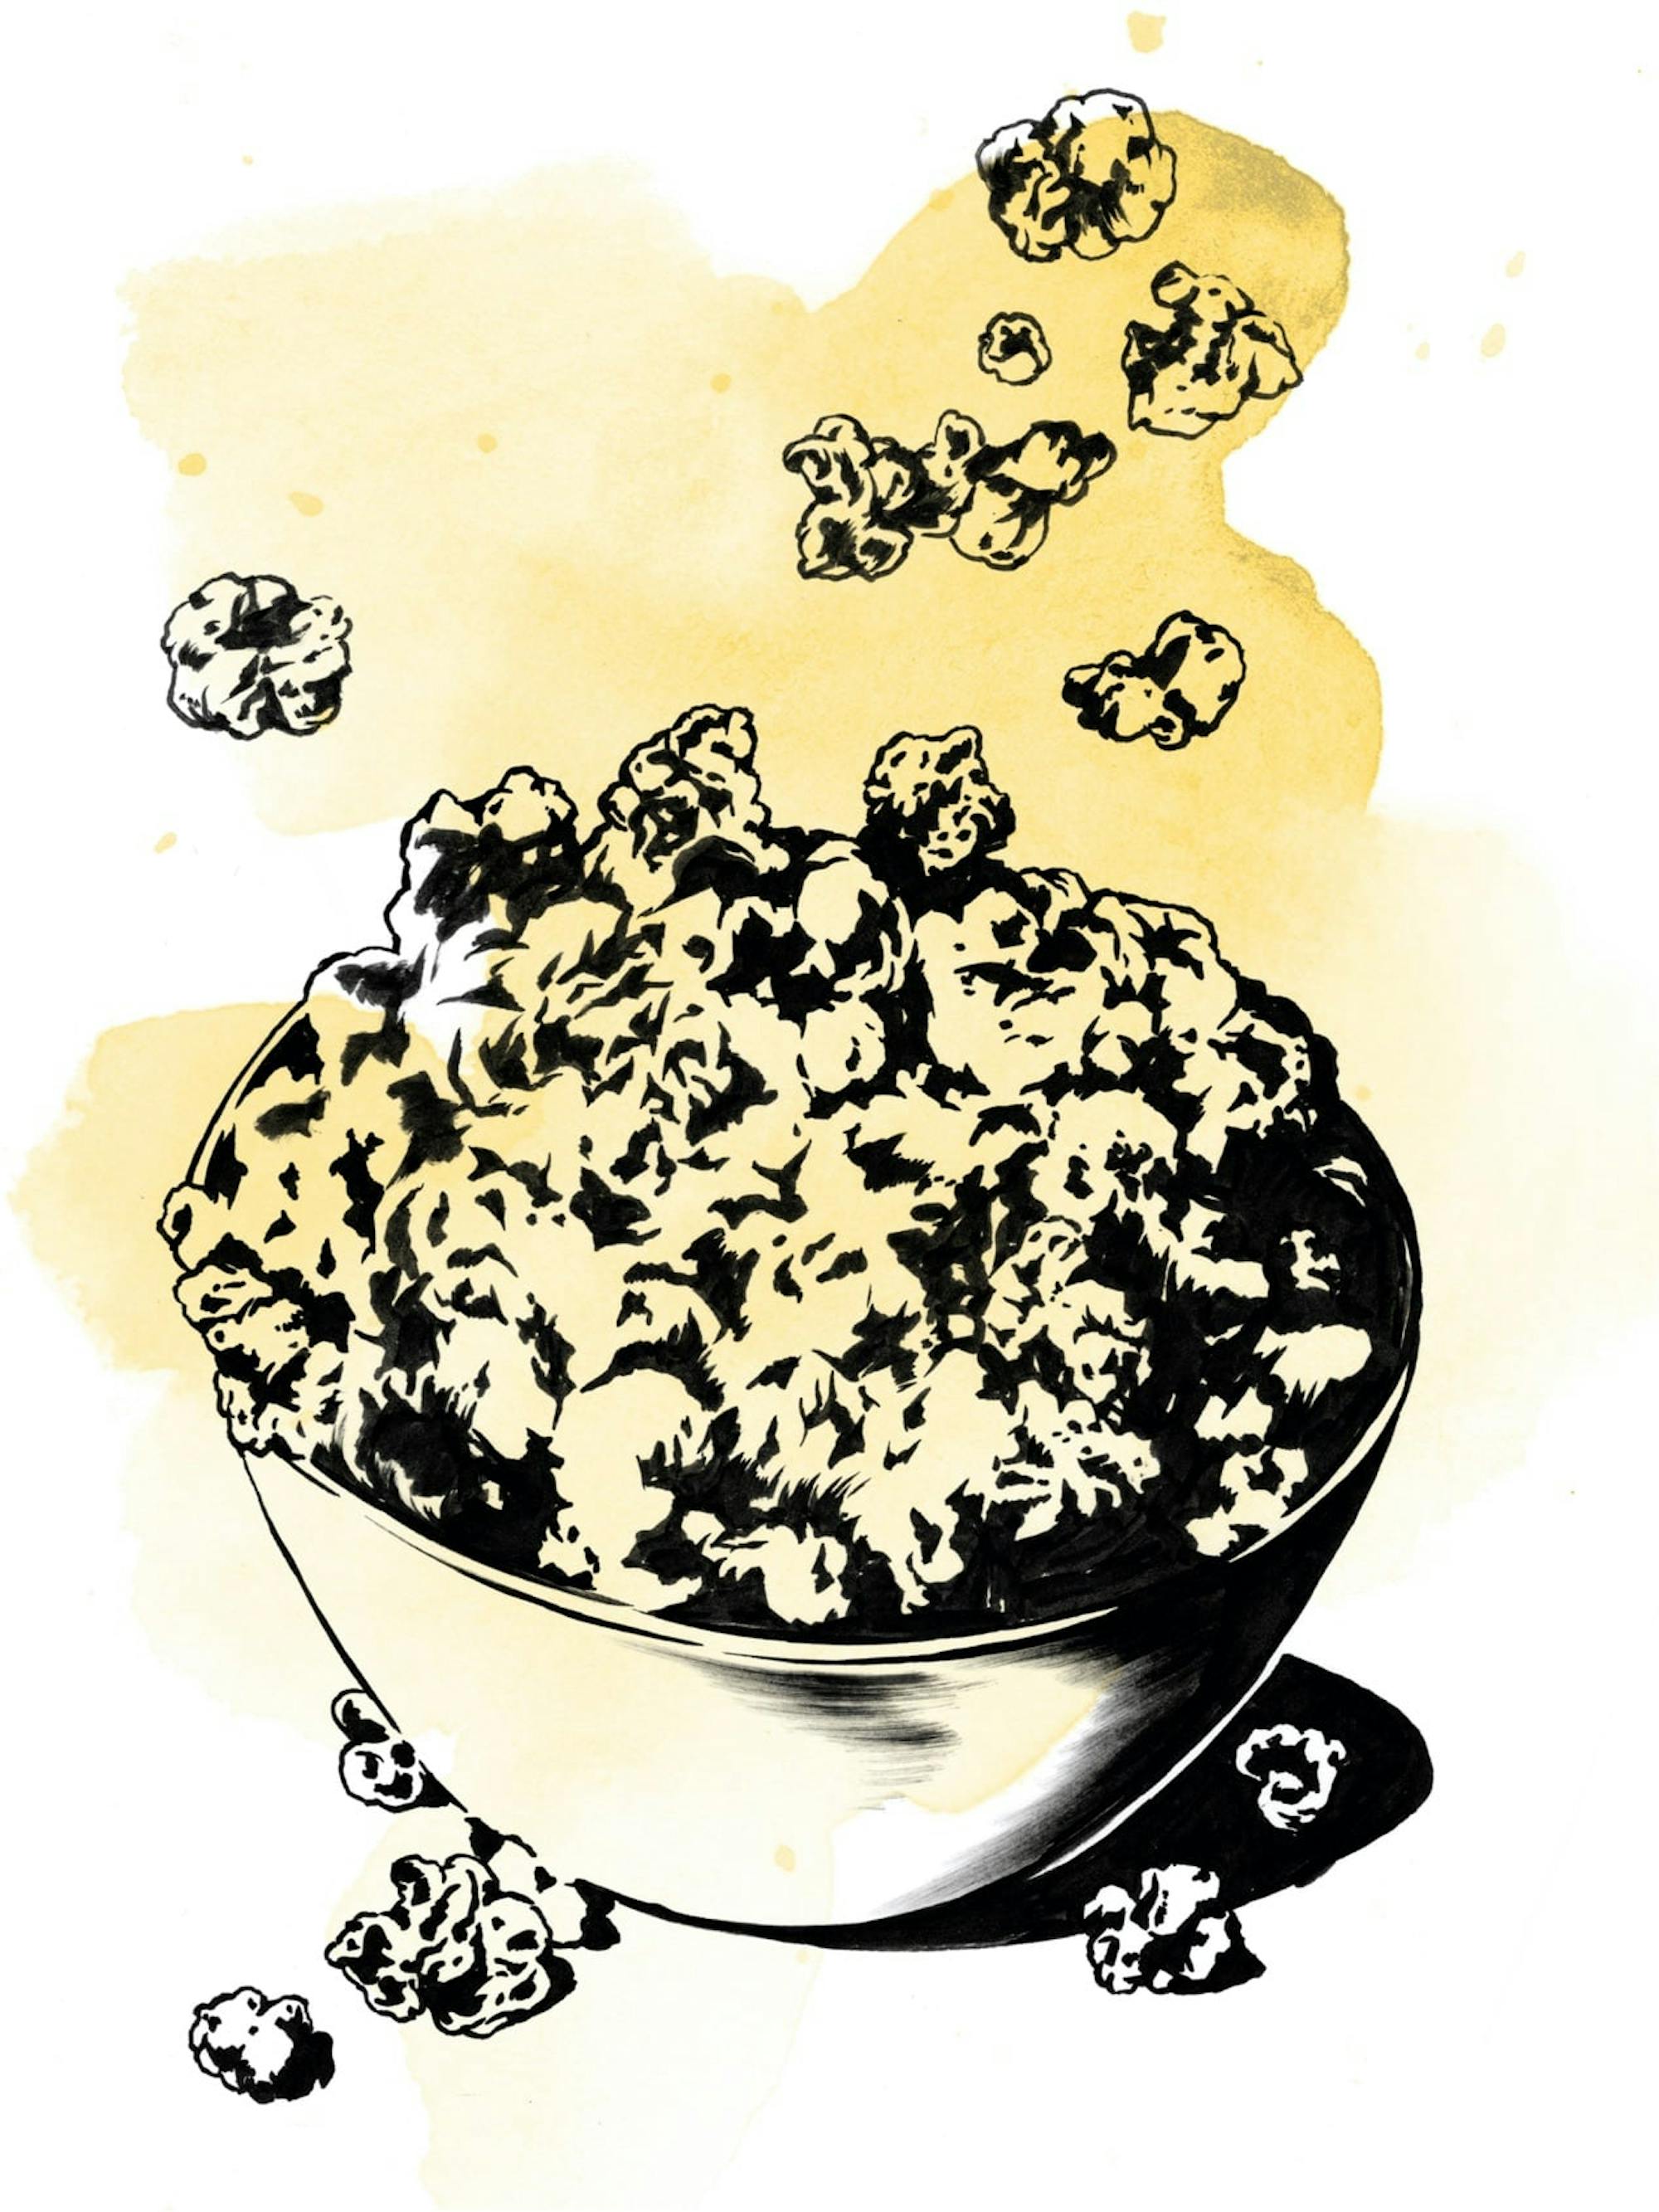 Josh O’Connor’s favorite on-set snack, popcorn.